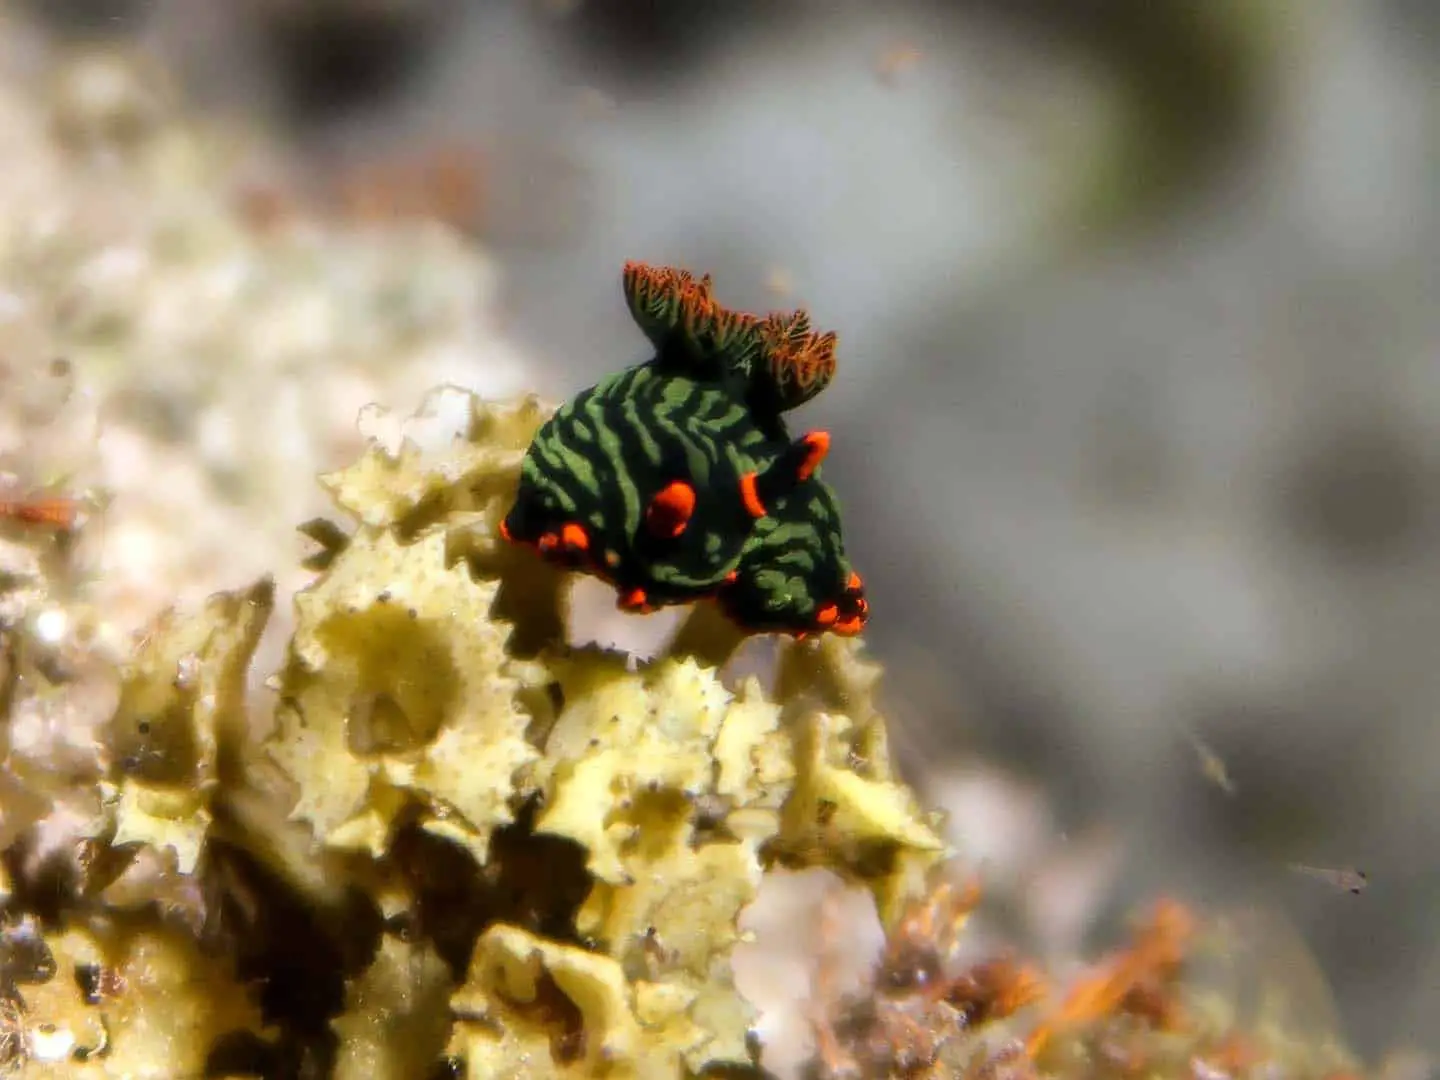 Nembrotha kubaryana- Black, green and orange nudibranch